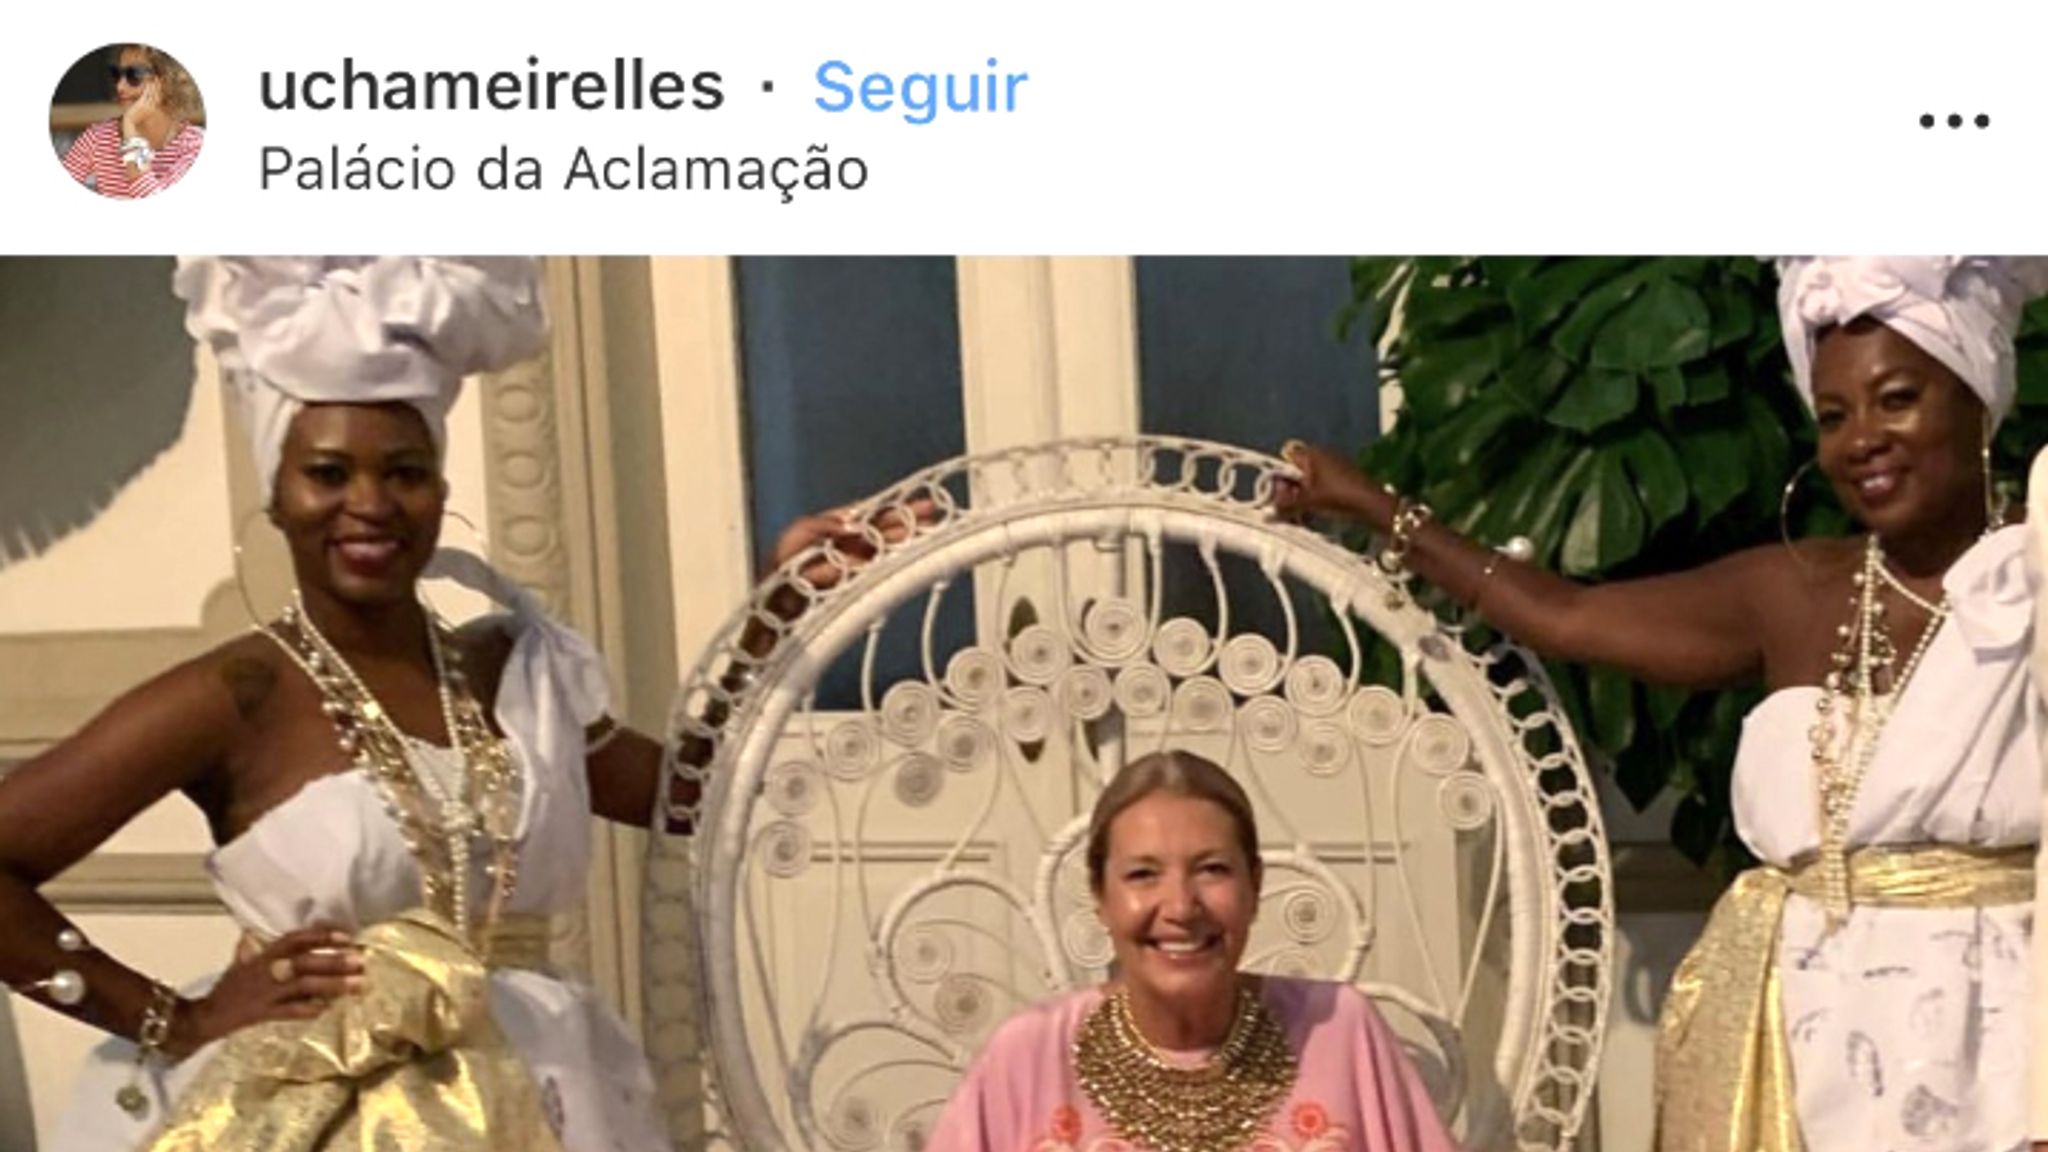 Vogue Brazil executive Donata Meirelles quits over 'slavery' party picture, World News